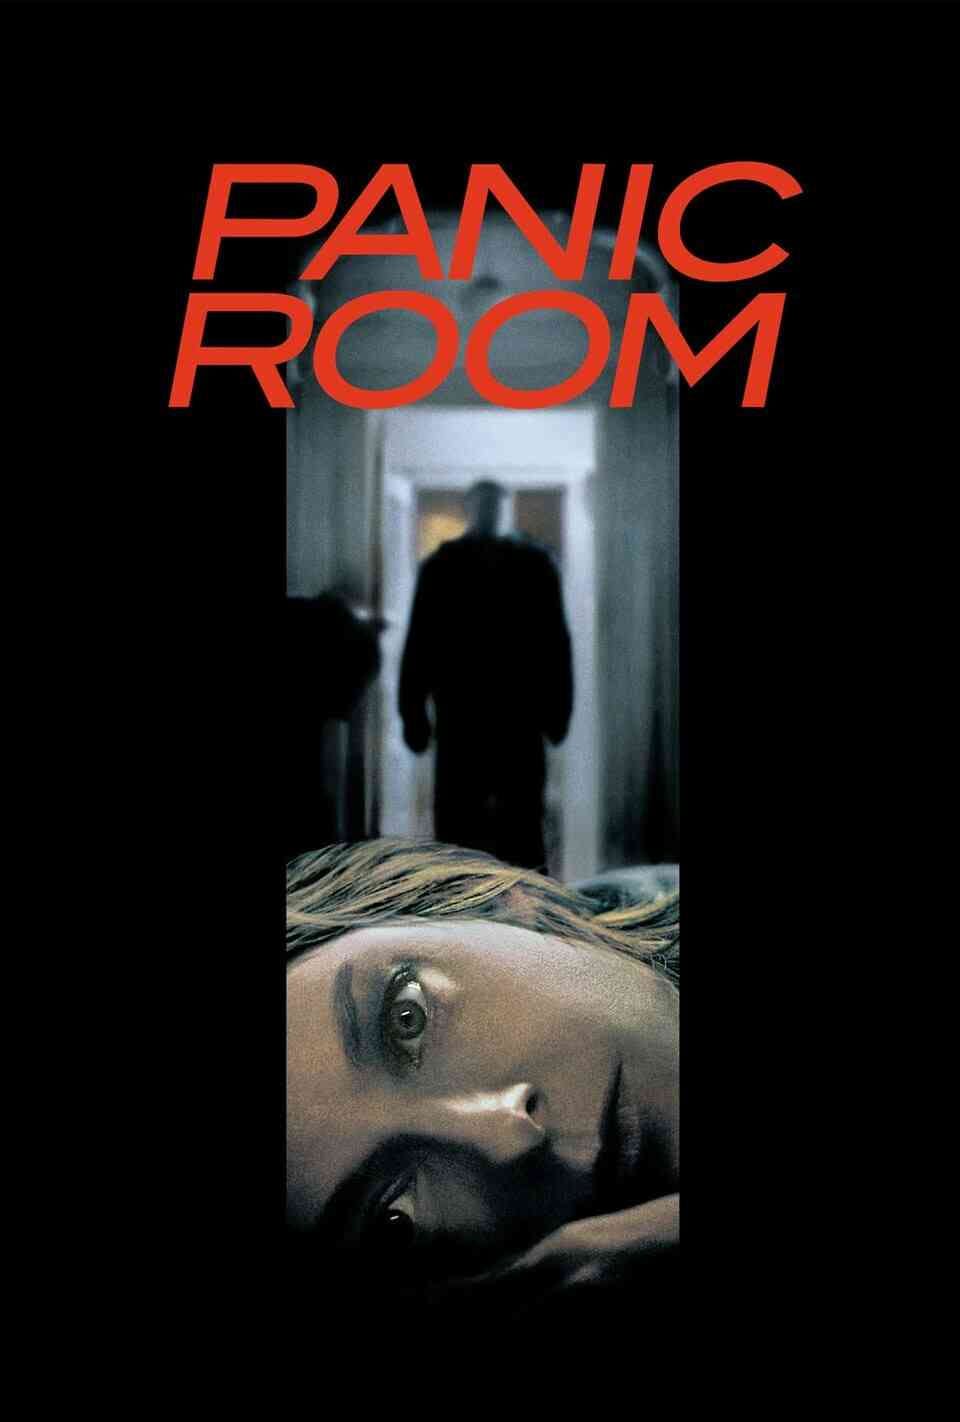 Read Panic Room screenplay (poster)